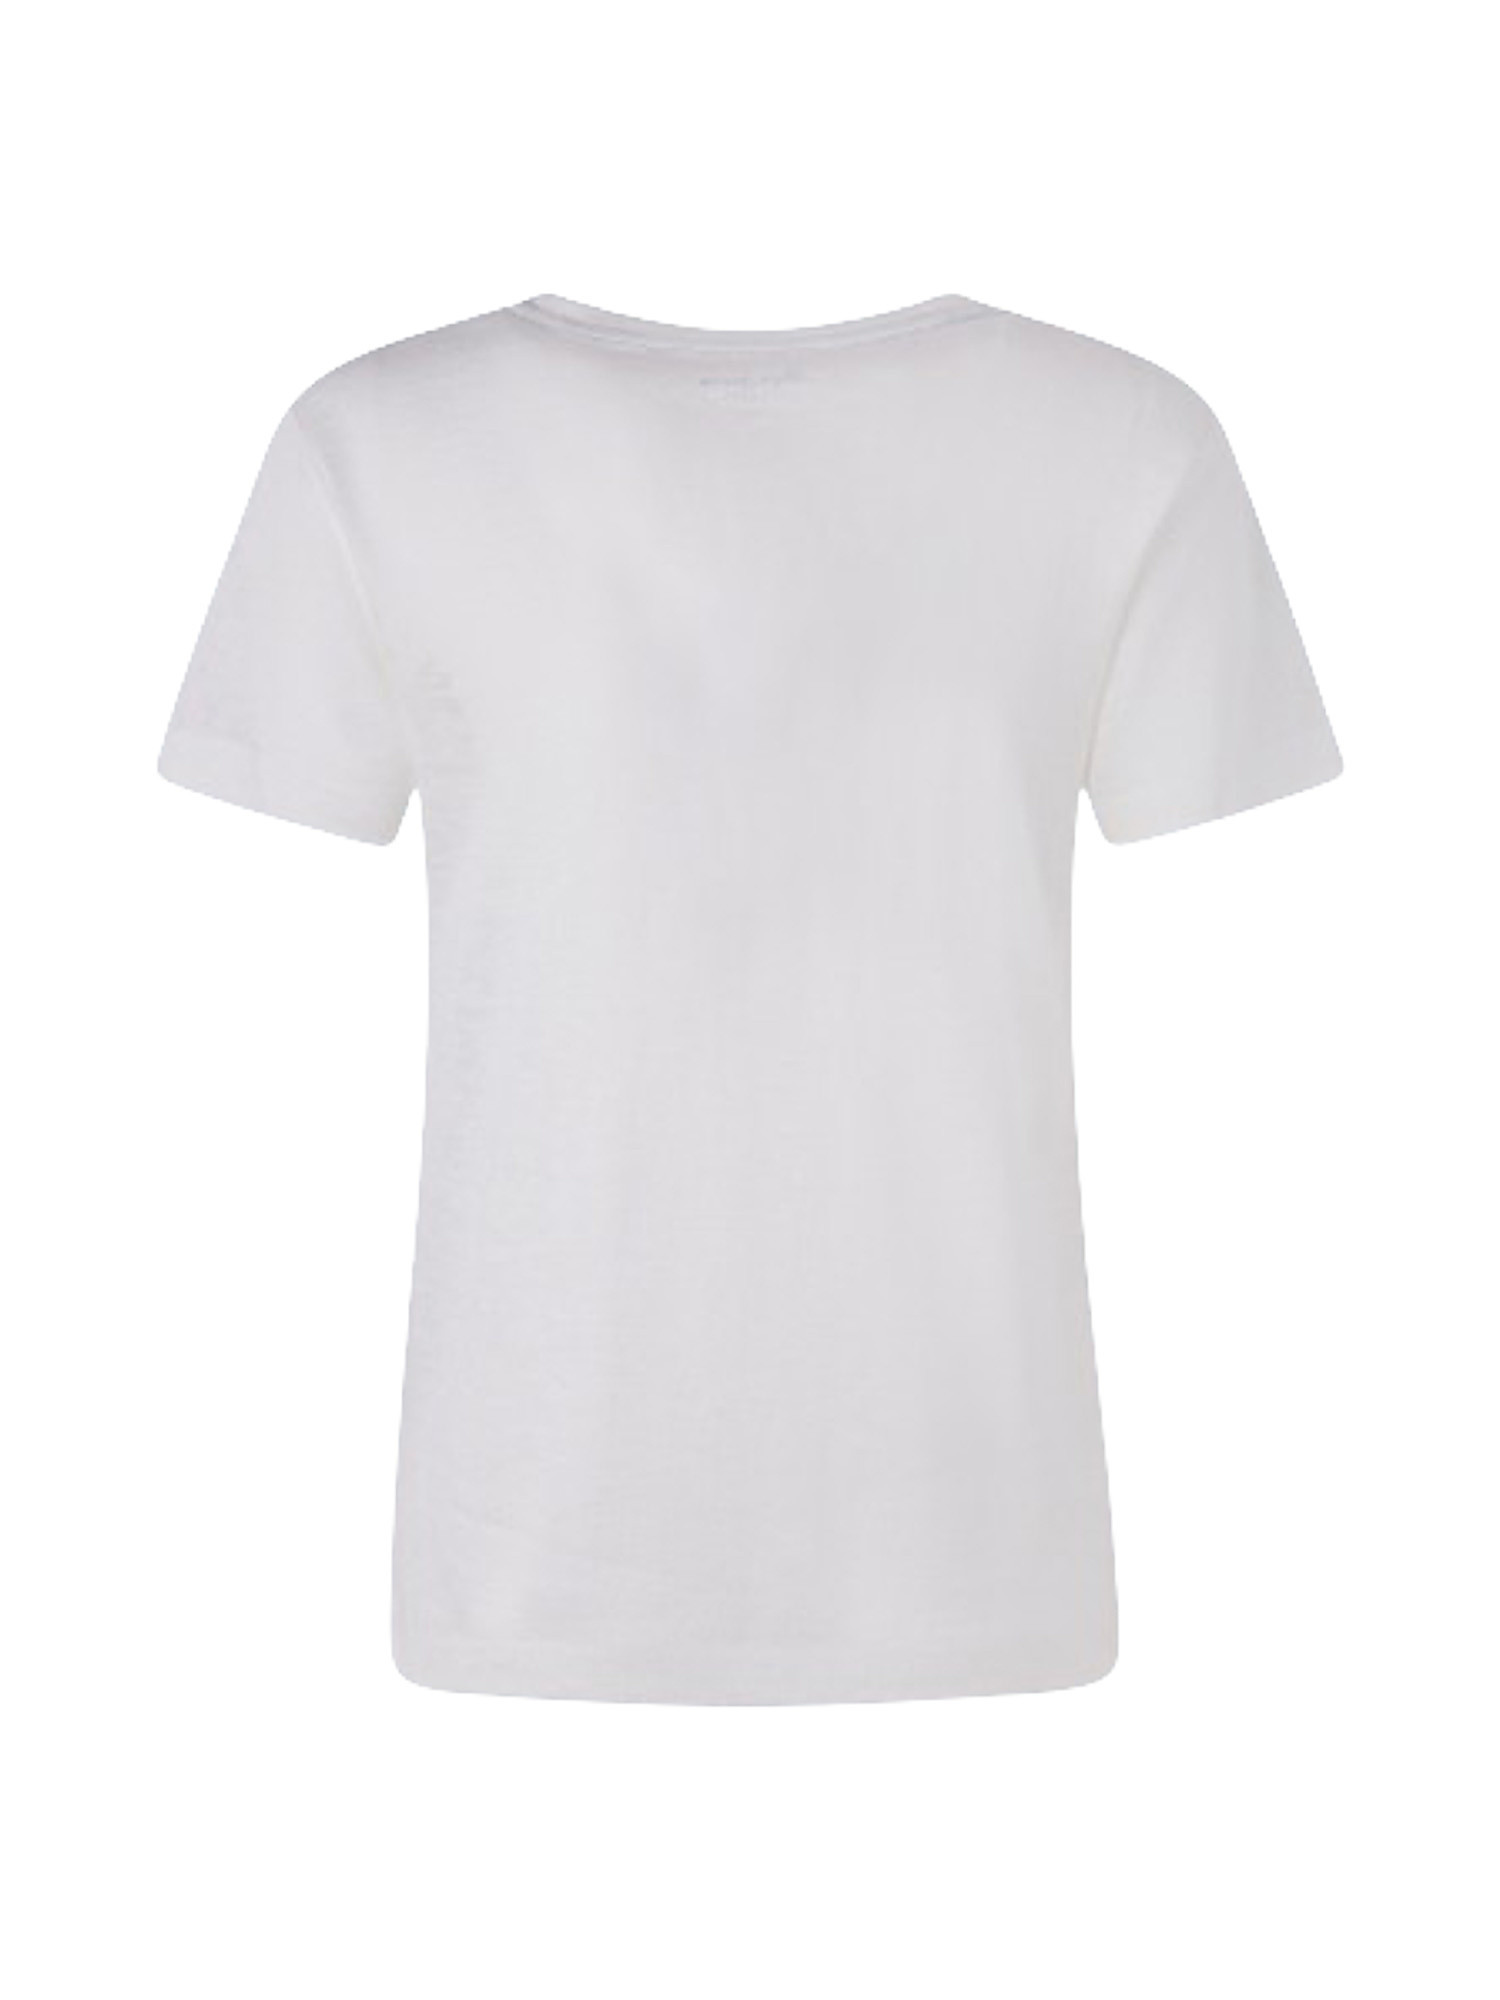 Caitlin printed logo t-shirt, White, large image number 1